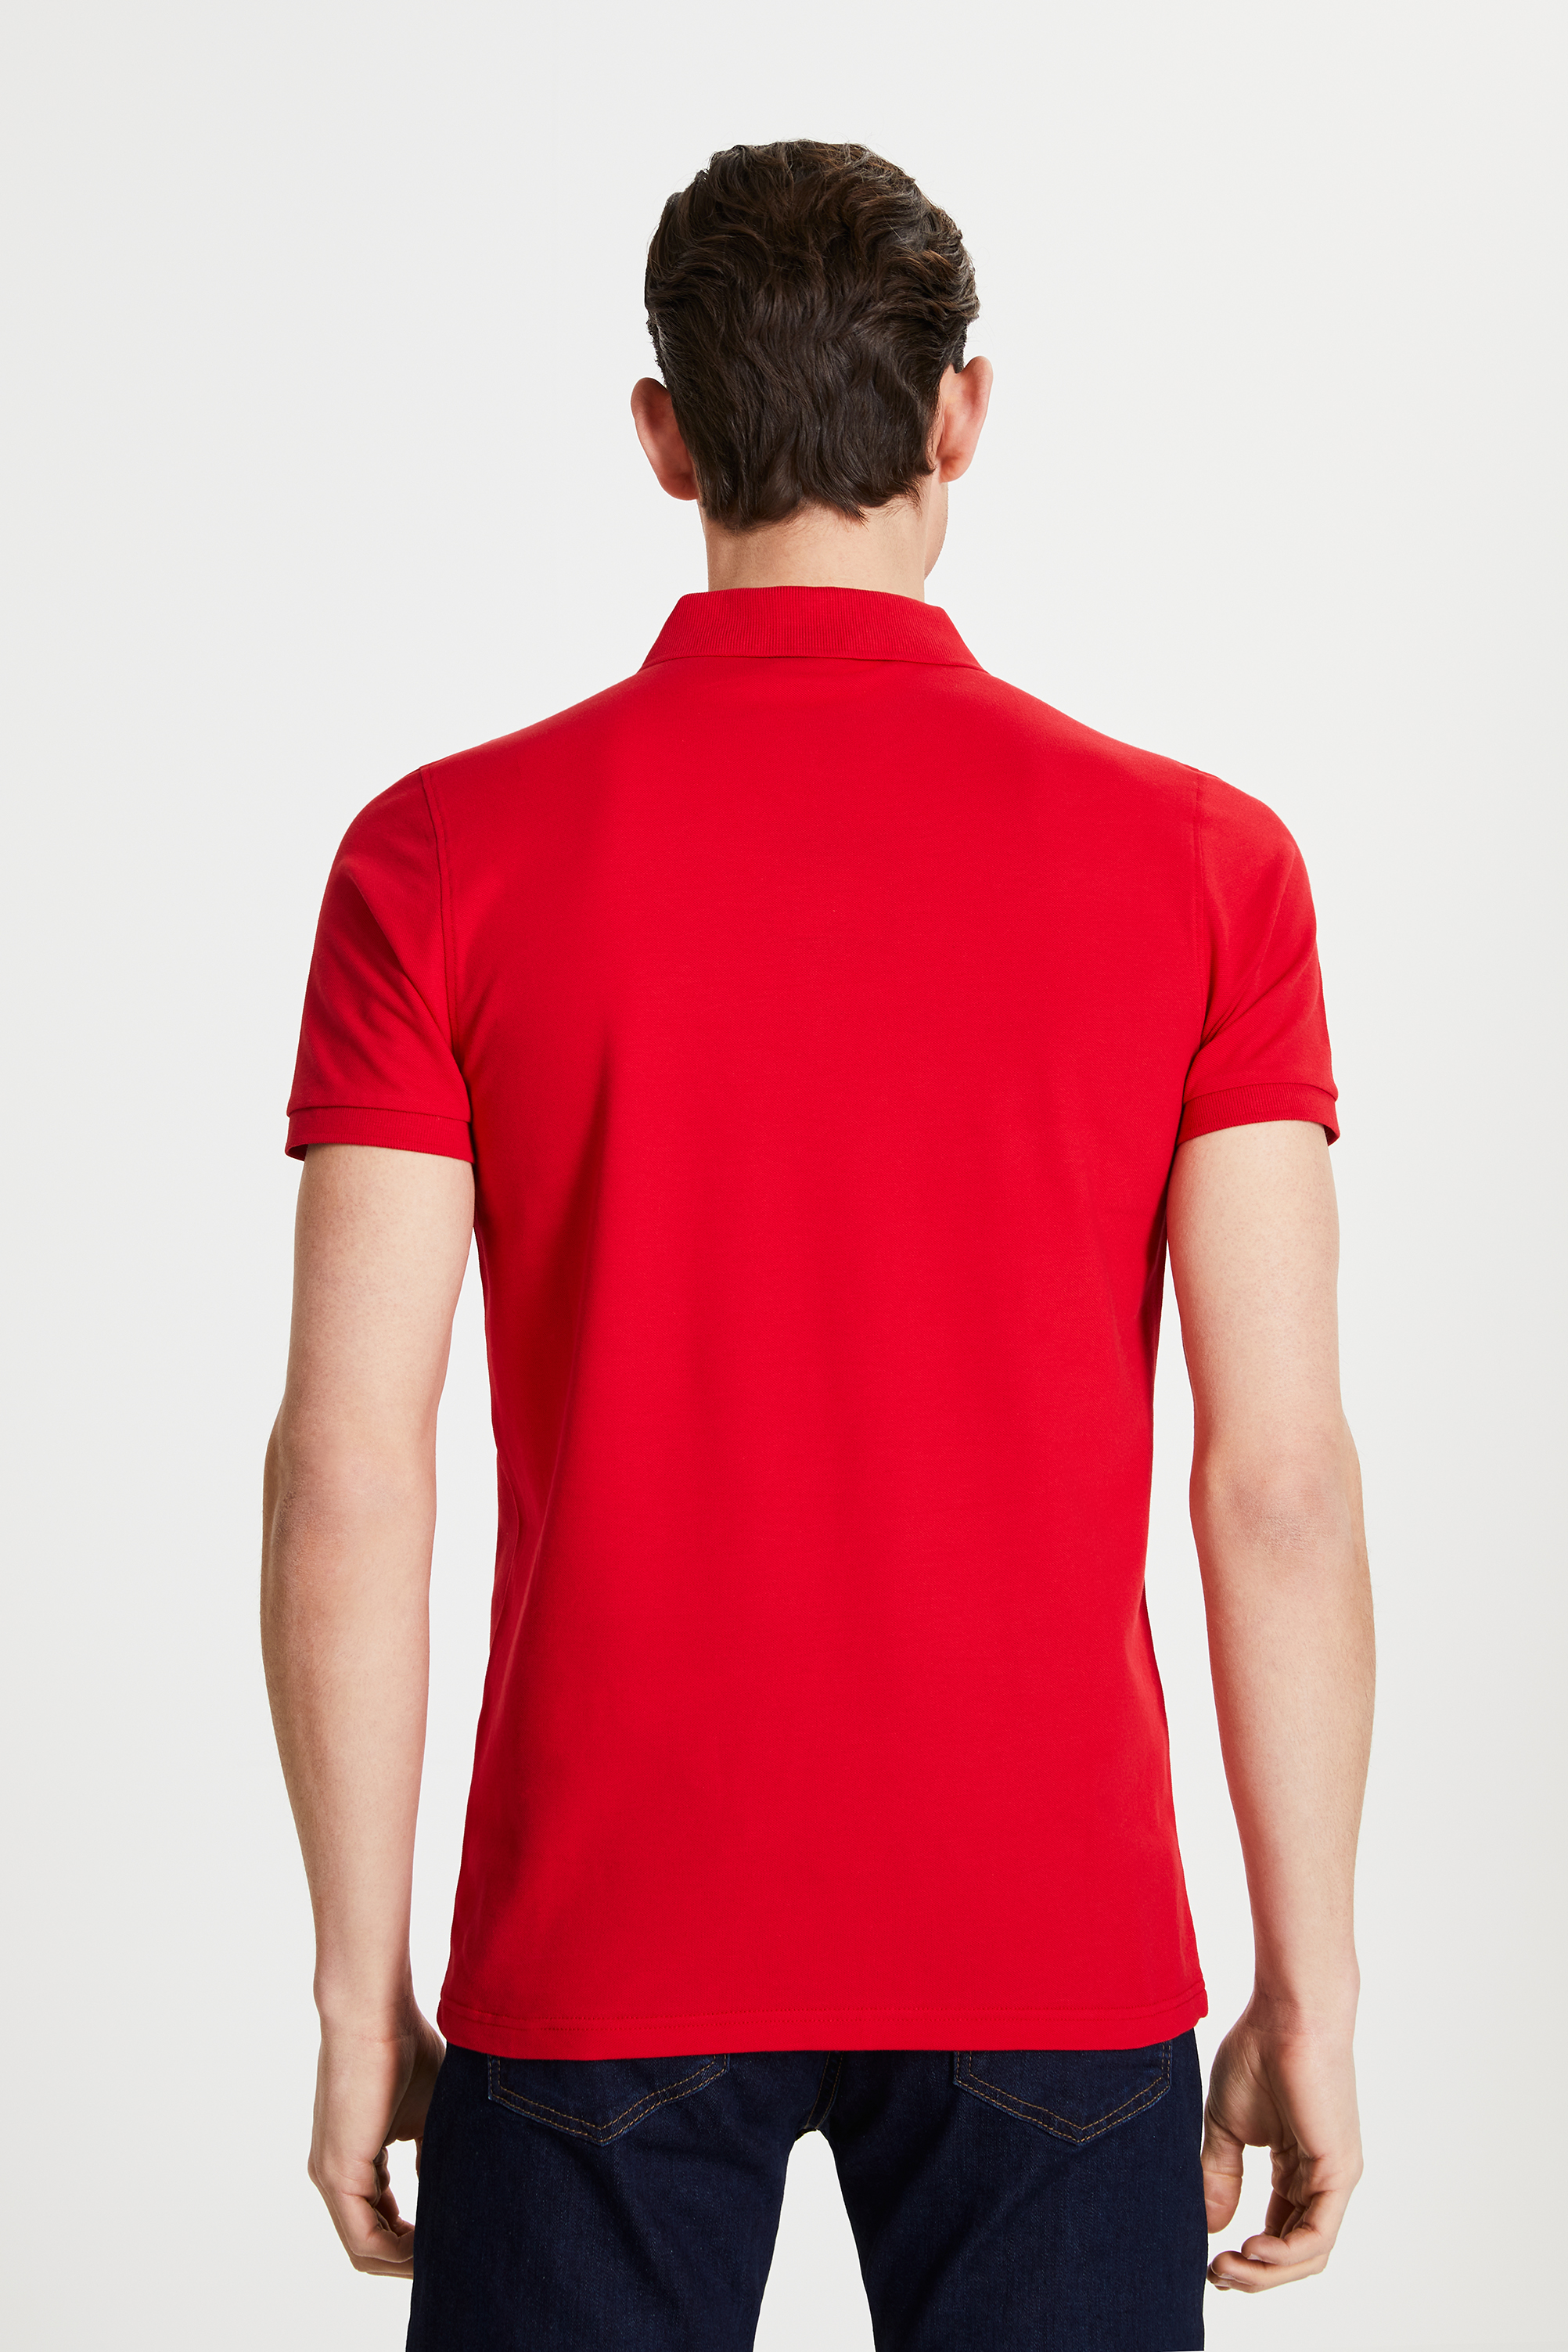 Damat Tween Tween Kırmızı T-shirt. 4